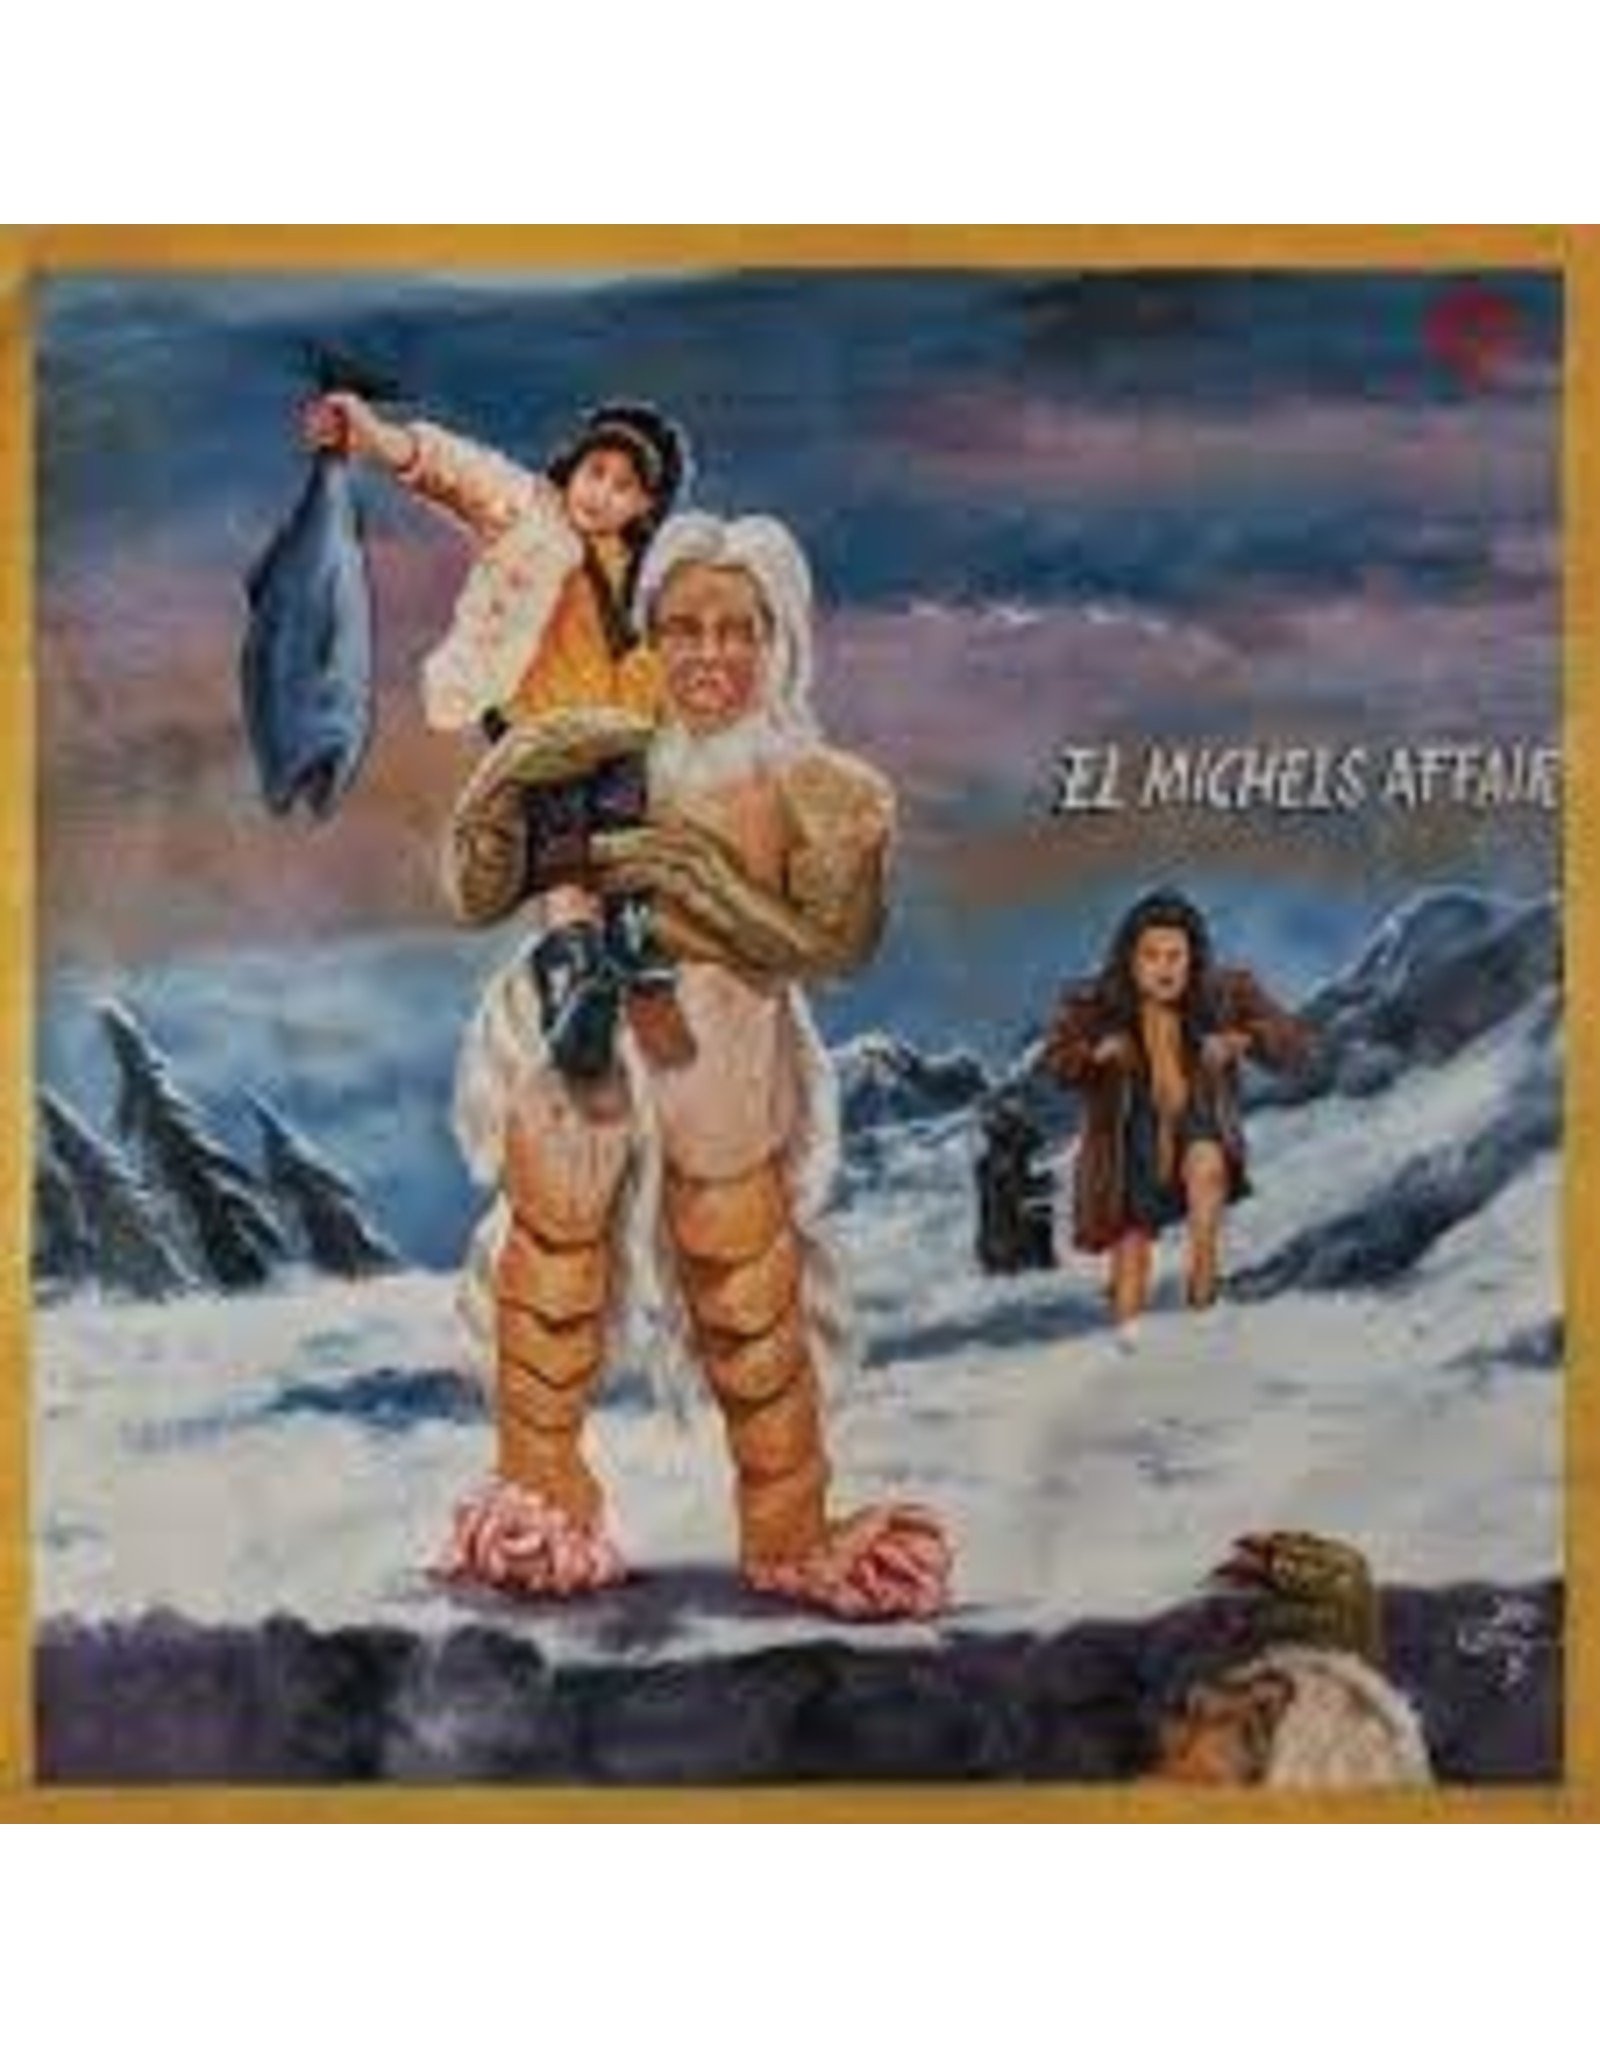 El Michels Affair -Abominable EP LP